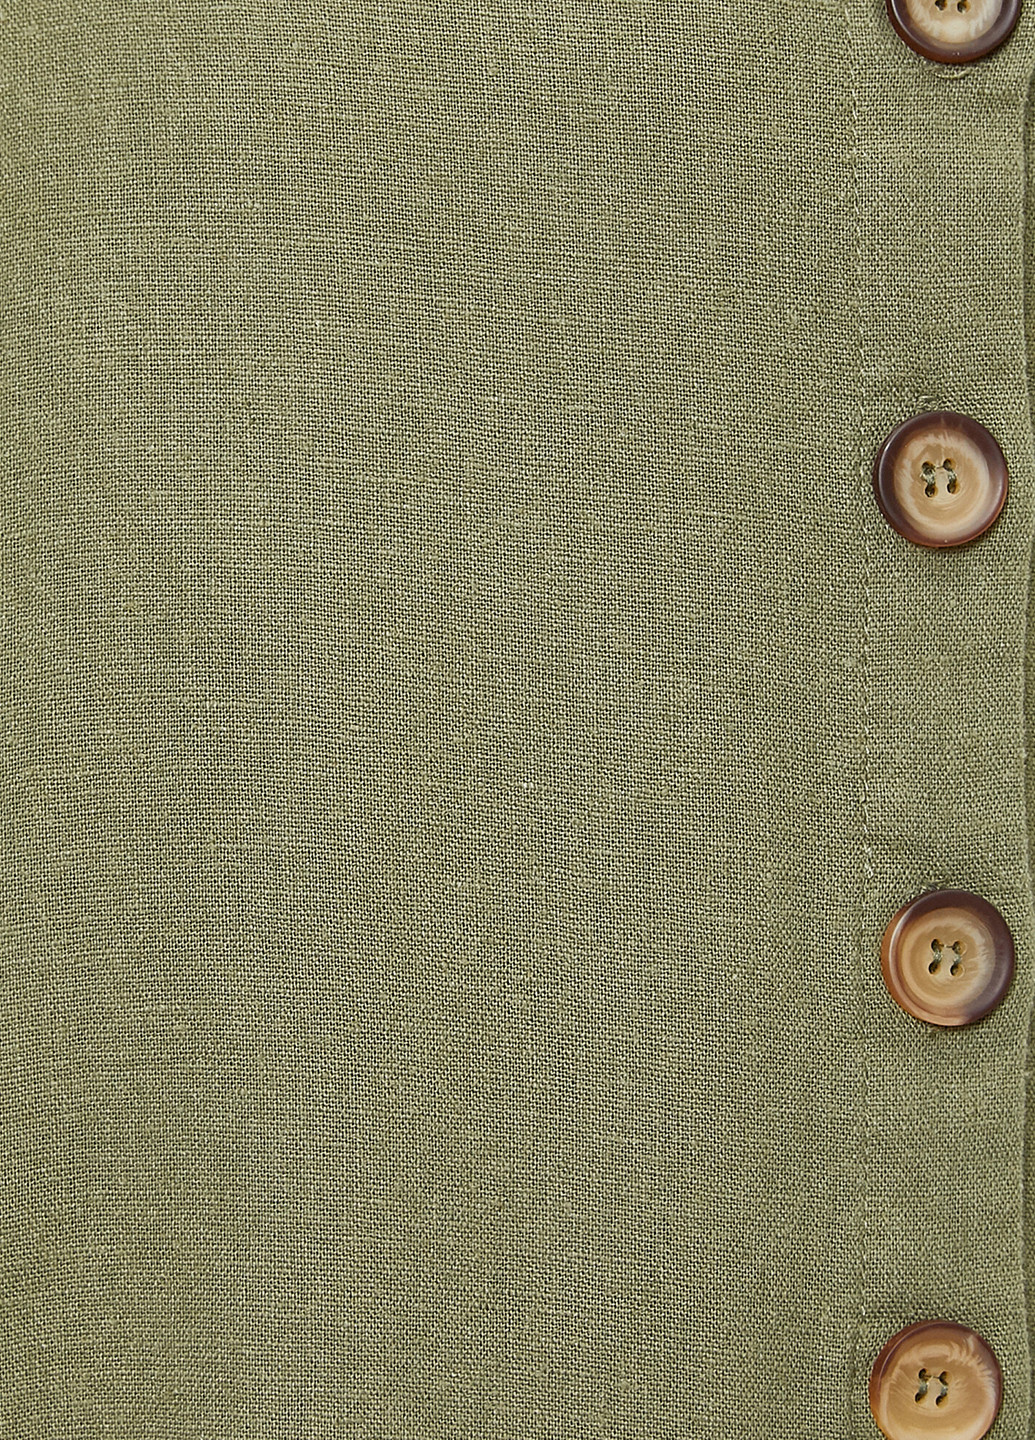 Оливковая (хаки) кэжуал однотонная юбка KOTON а-силуэта (трапеция)